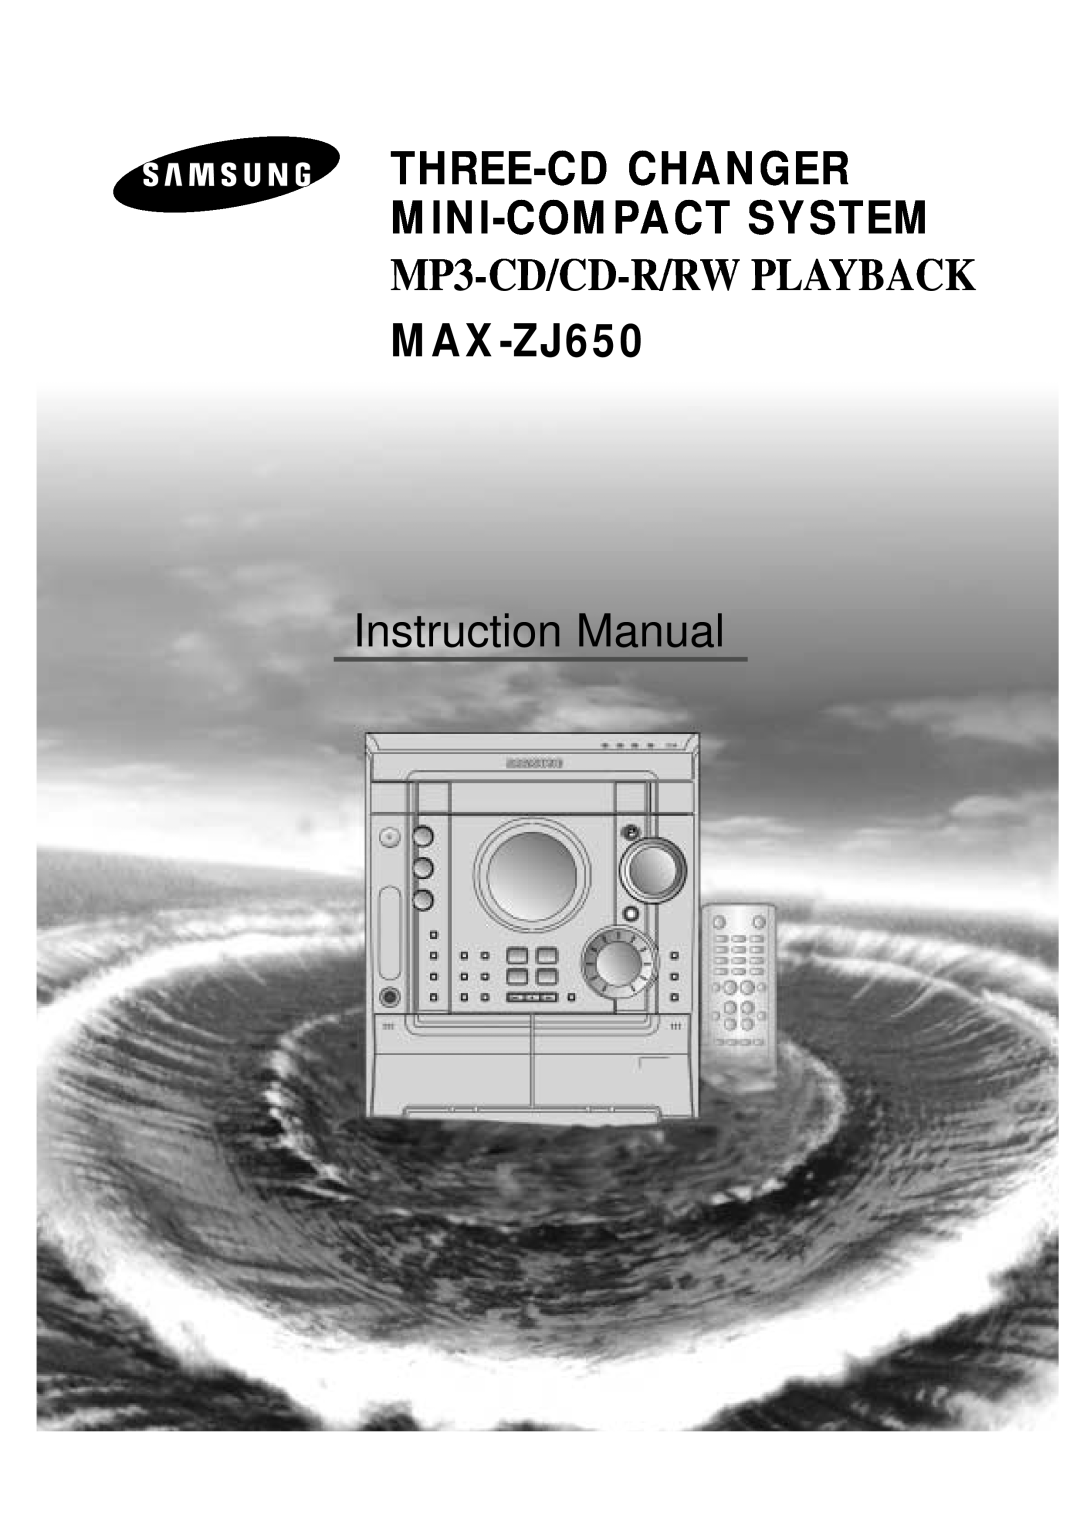 Samsung MAXZJ650RH/ELS manual Three-Cd Changer Mini-Compact System, MP3-CD/CD-R/RW PLAYBACK, MAX-ZJ650, Instruction Manual 